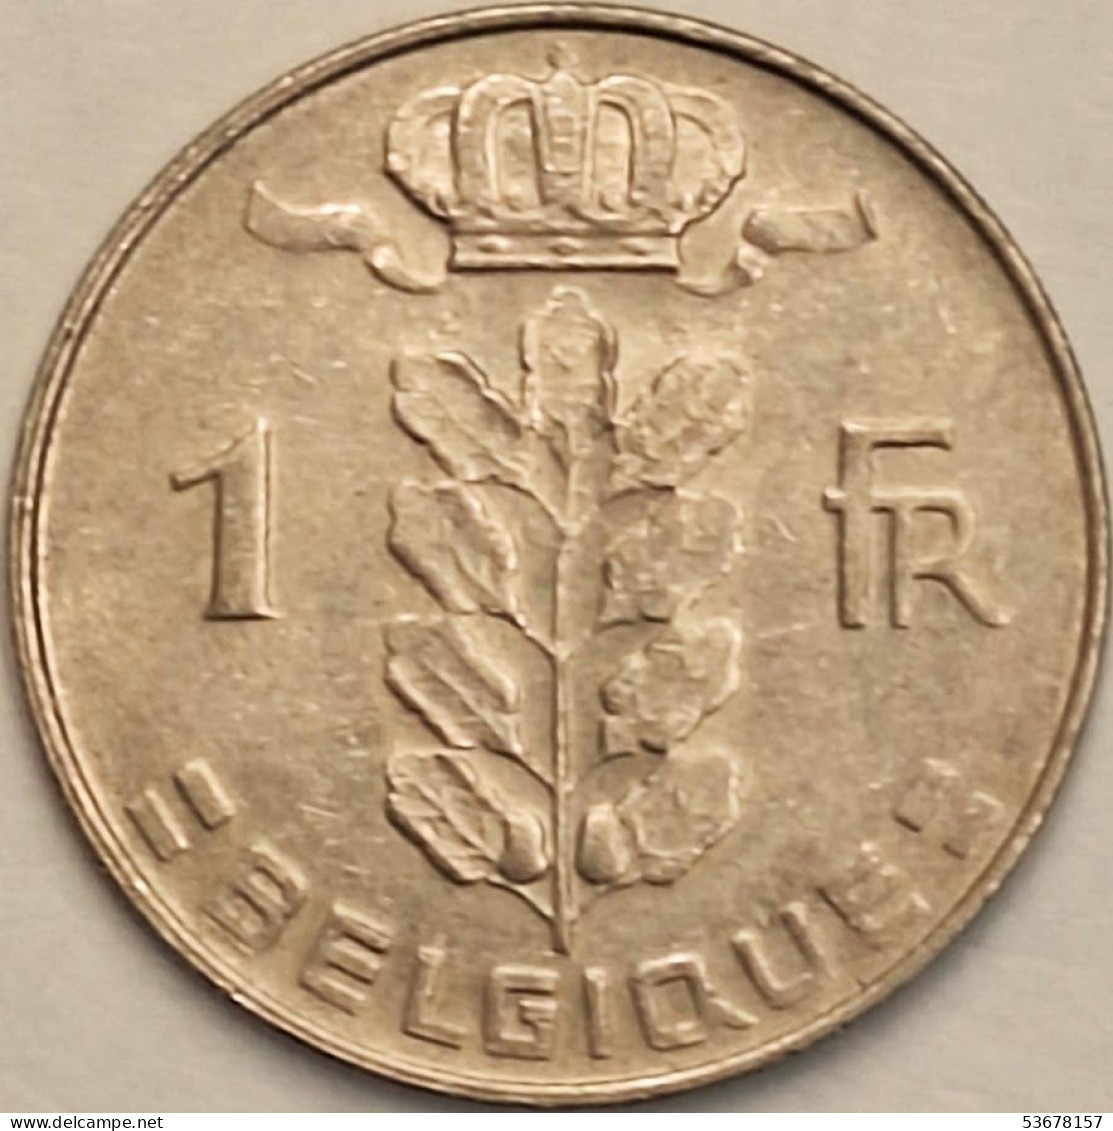 Belgium - Franc 1974, KM# 142.1 (#3118) - 1 Franc